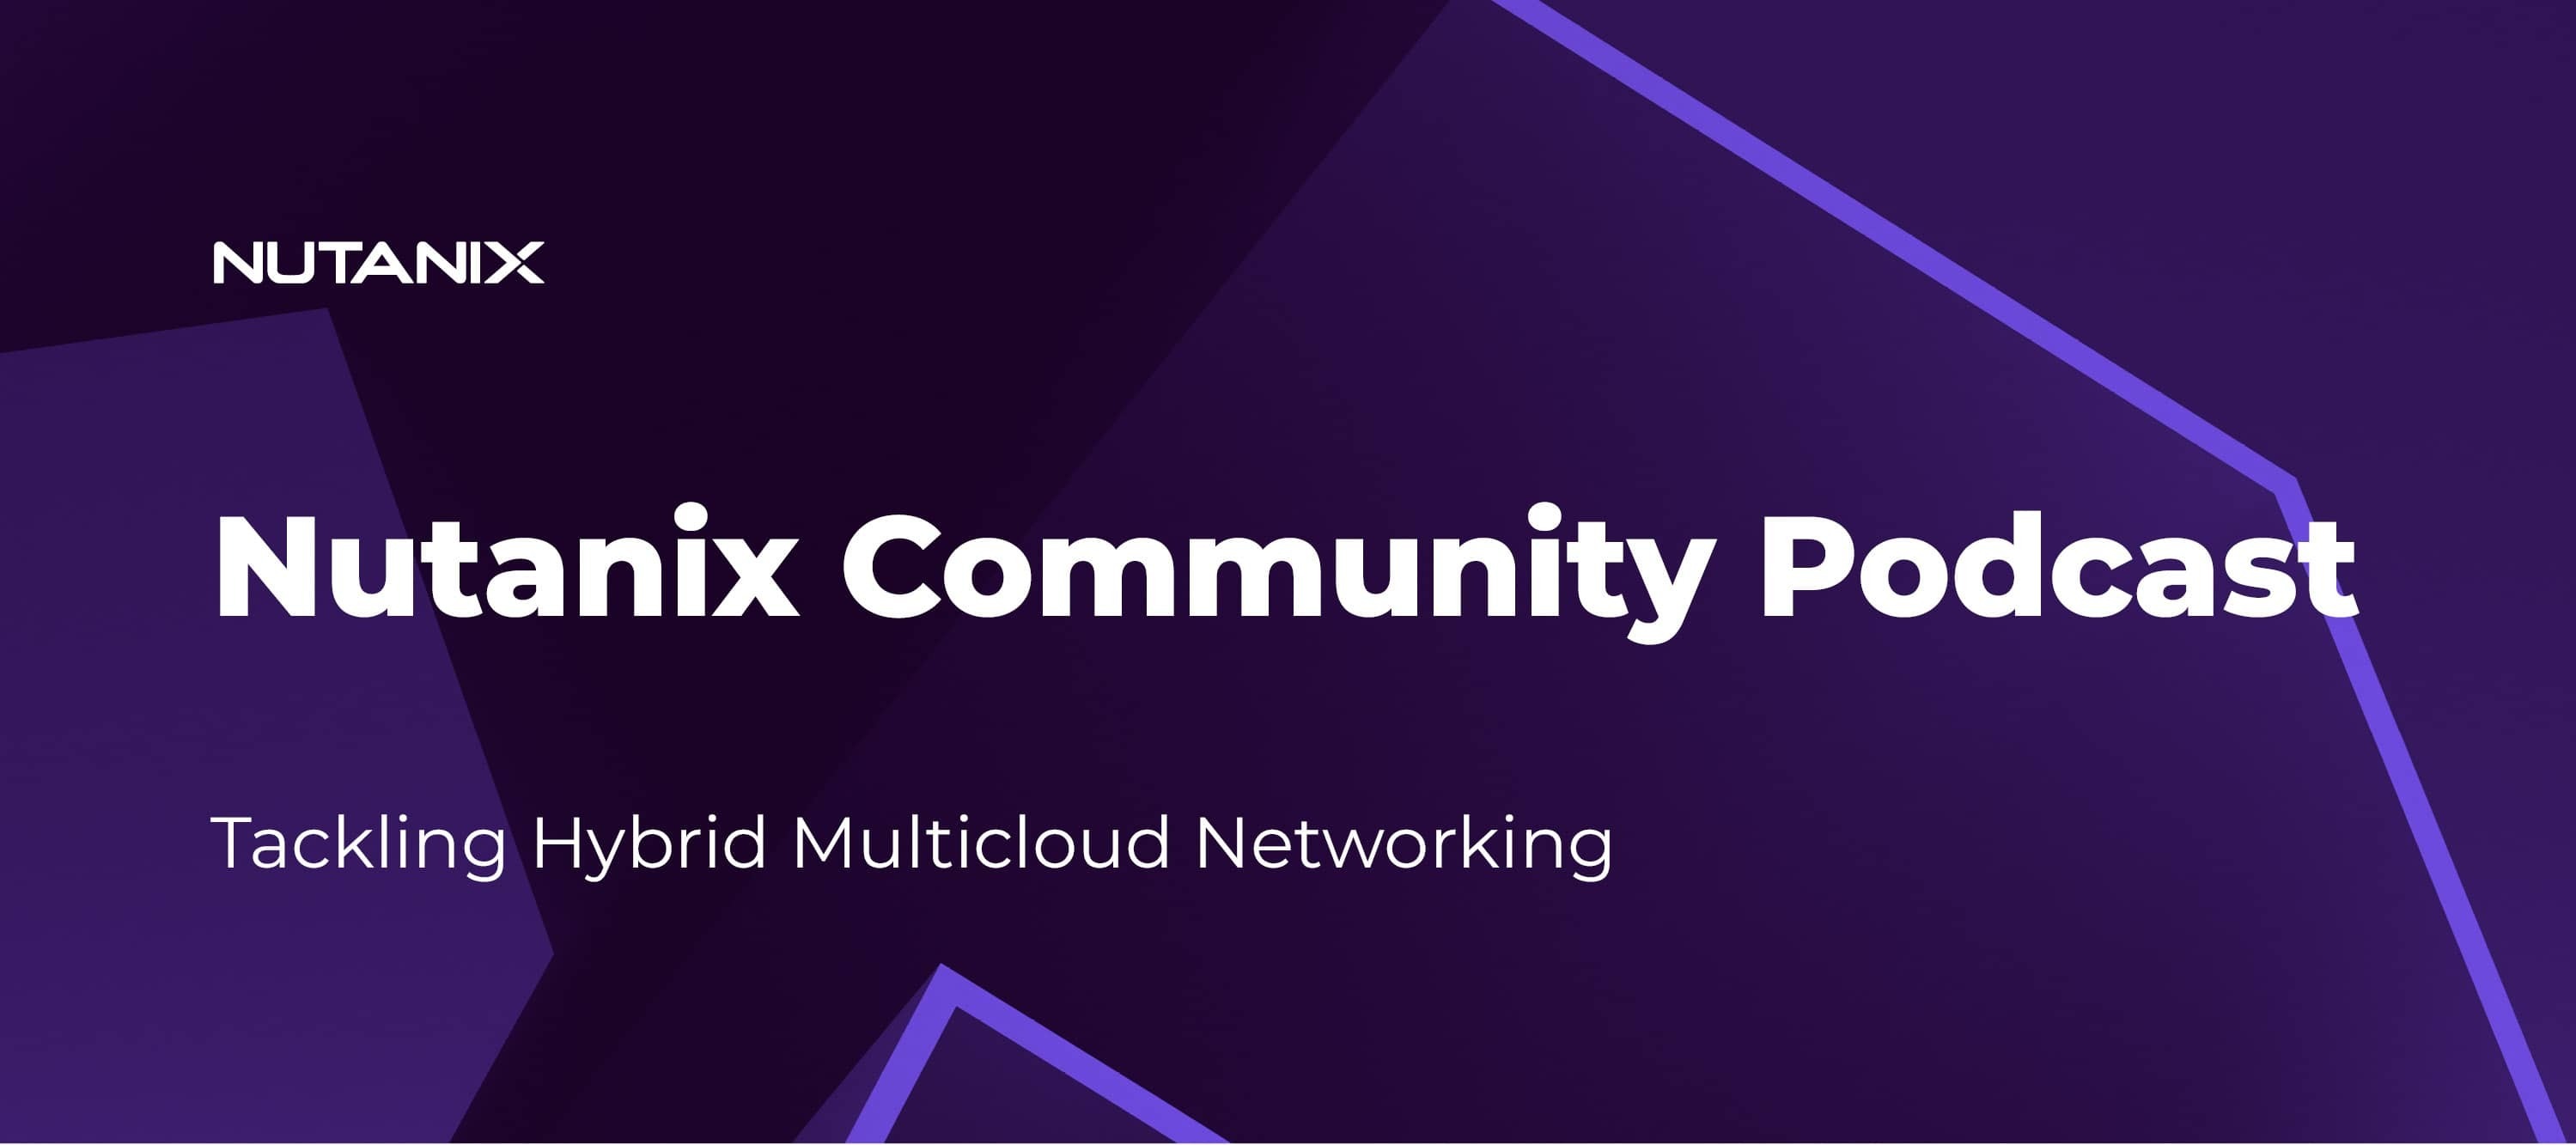 Nutanix Community Podcast: Tackling Hybrid Multicloud Networking